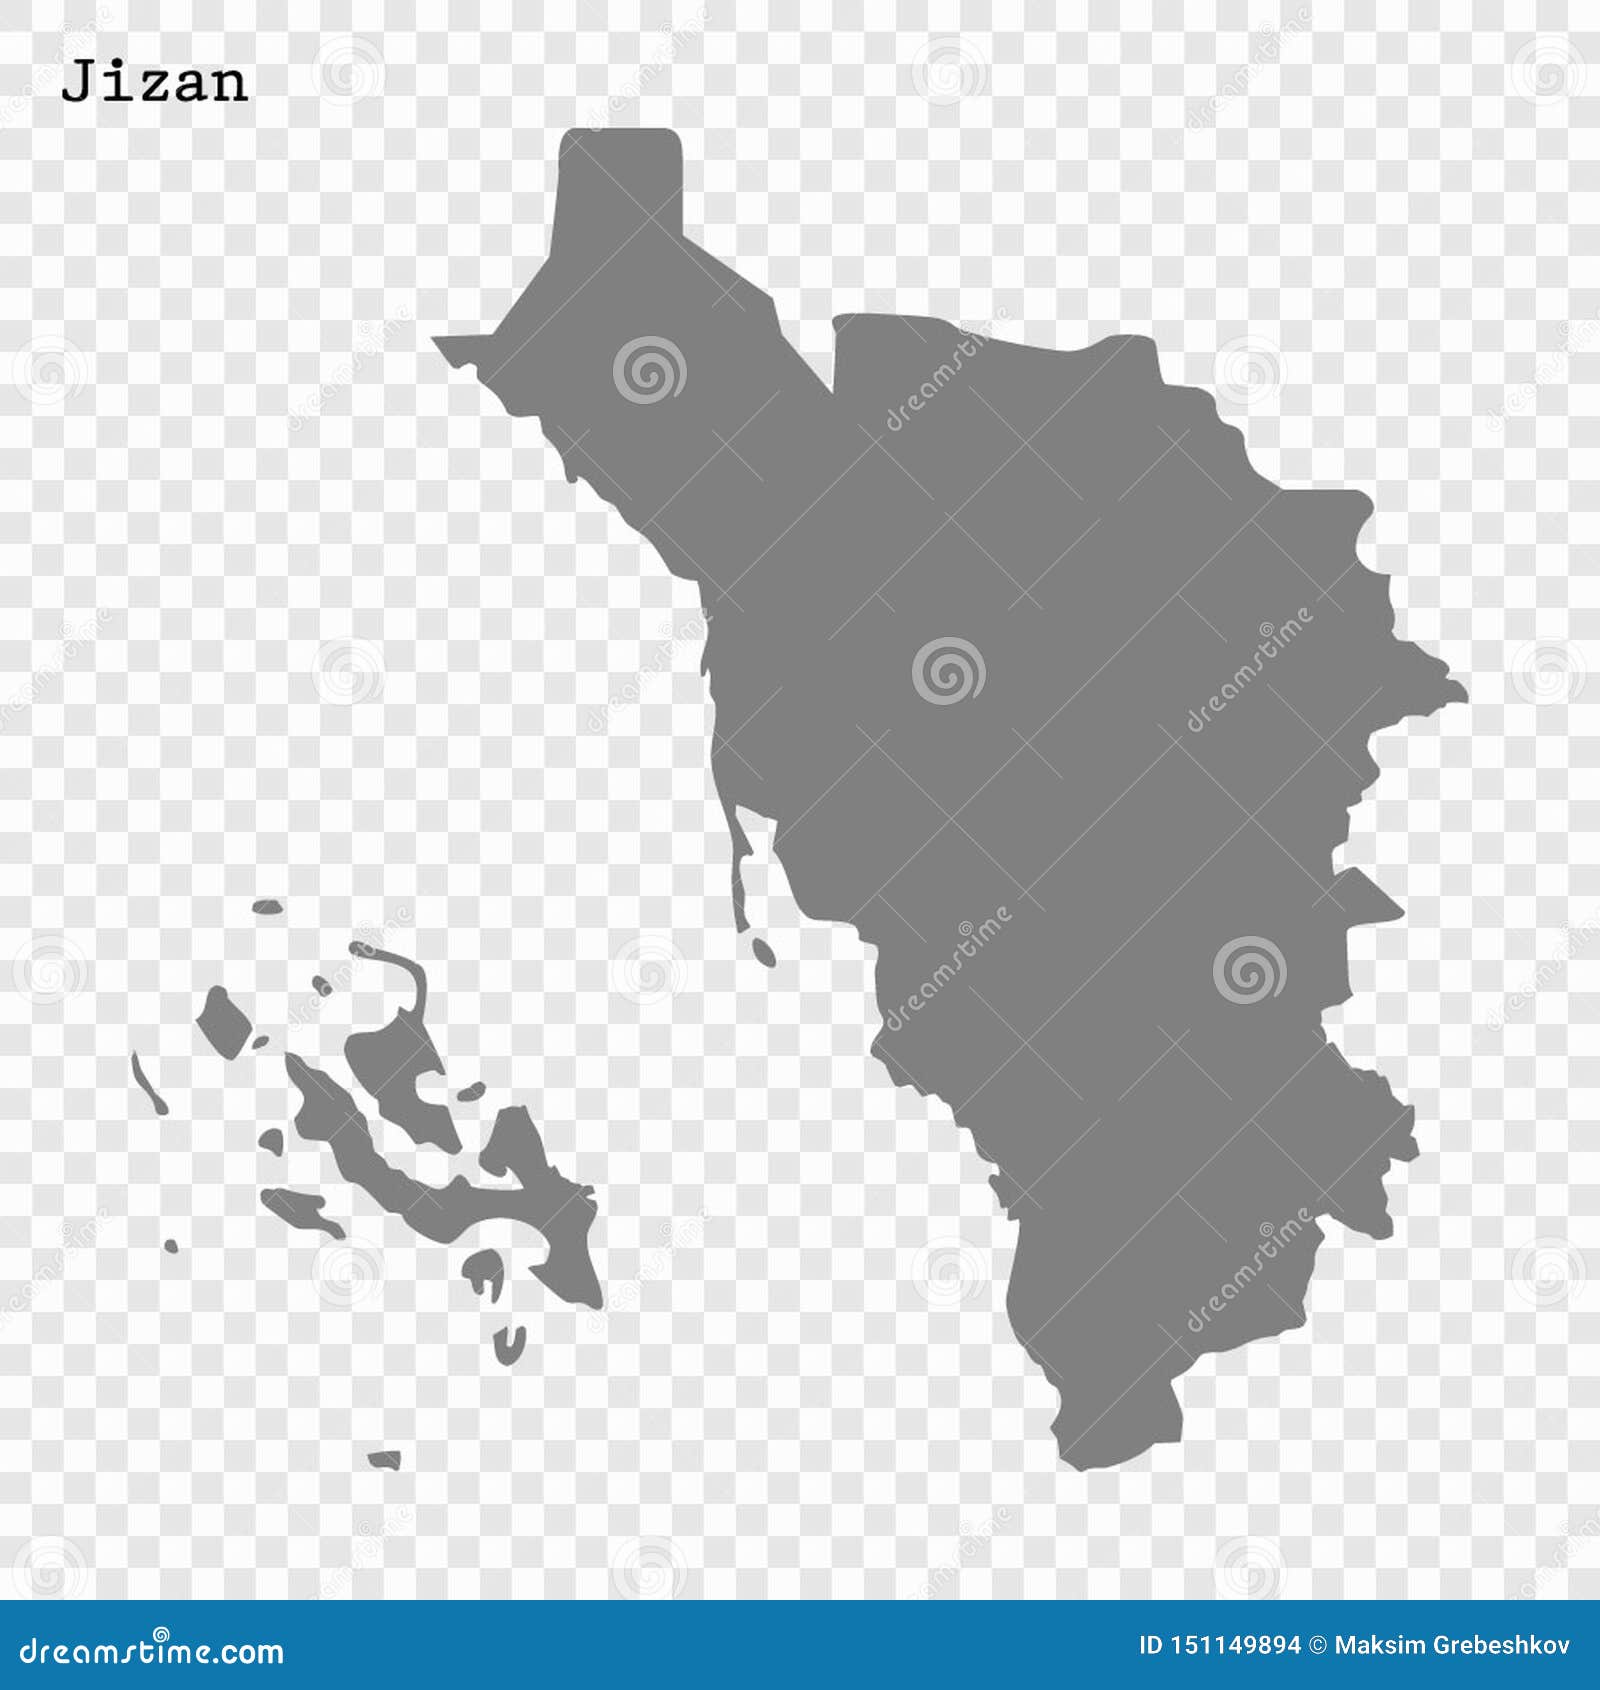 high quality map is a region of saudi arabia